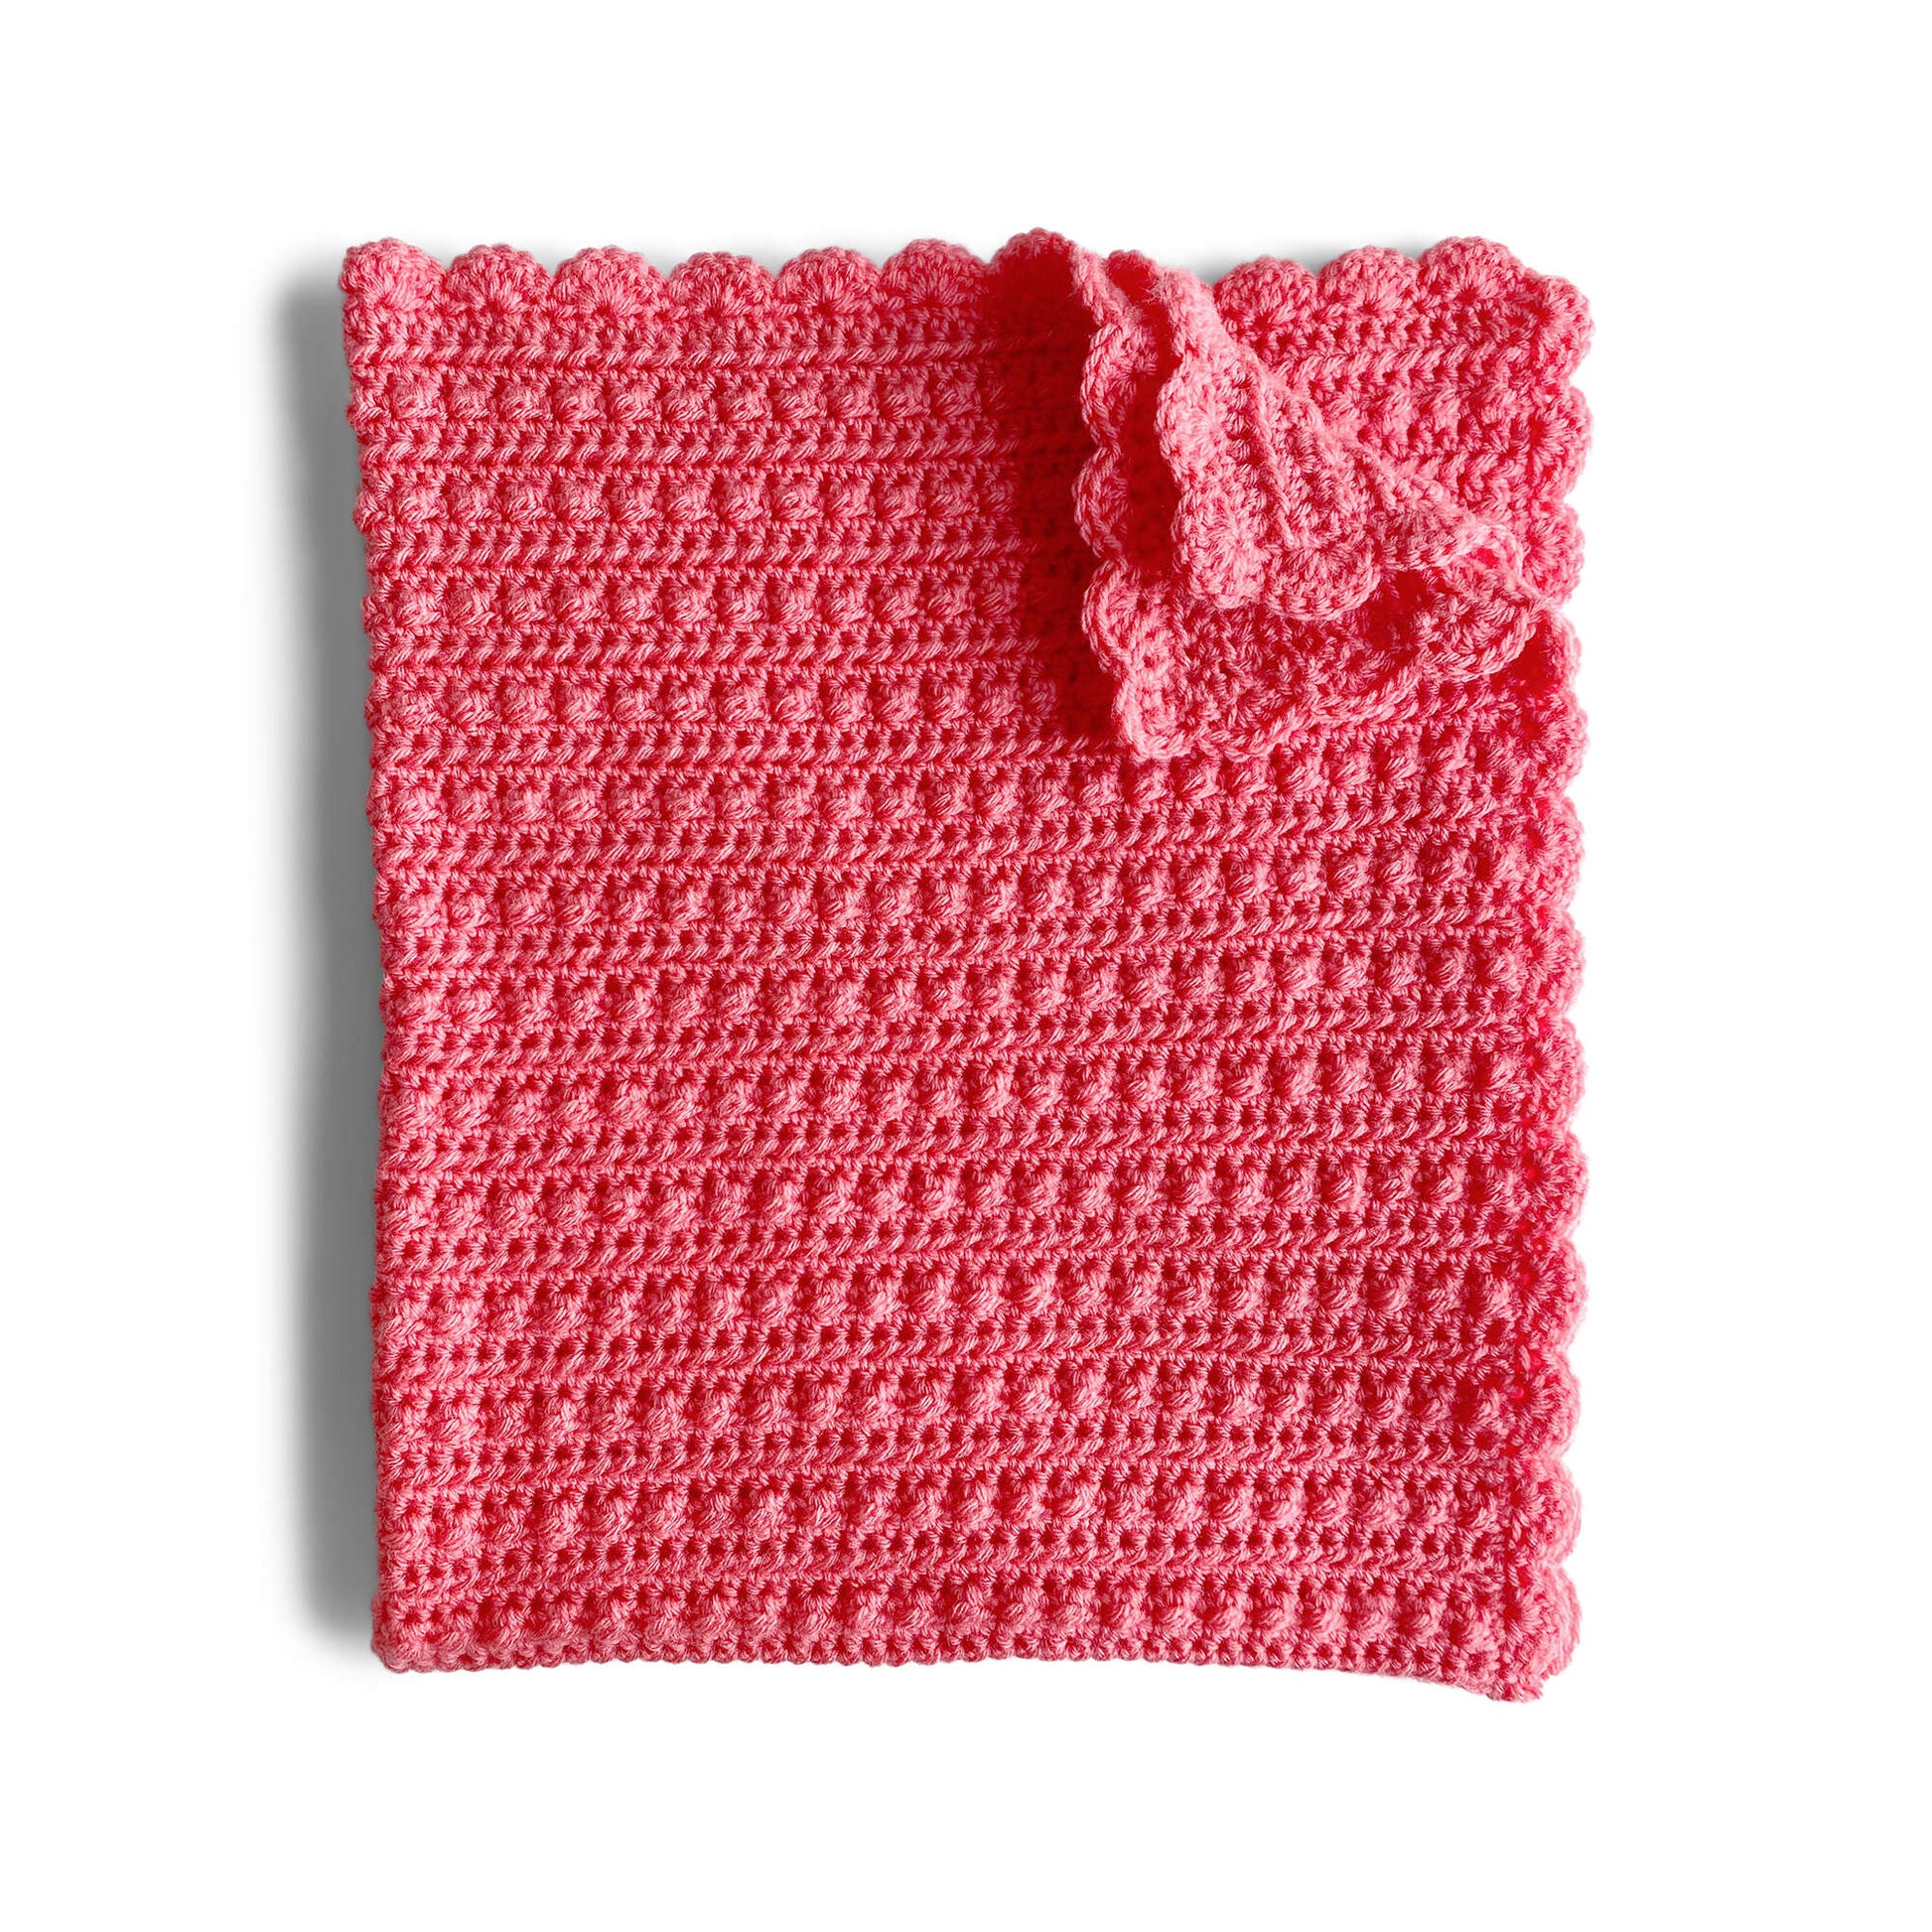 Red Heart Crochet Sweet Berries Baby Blanket Pattern | Yarnspirations